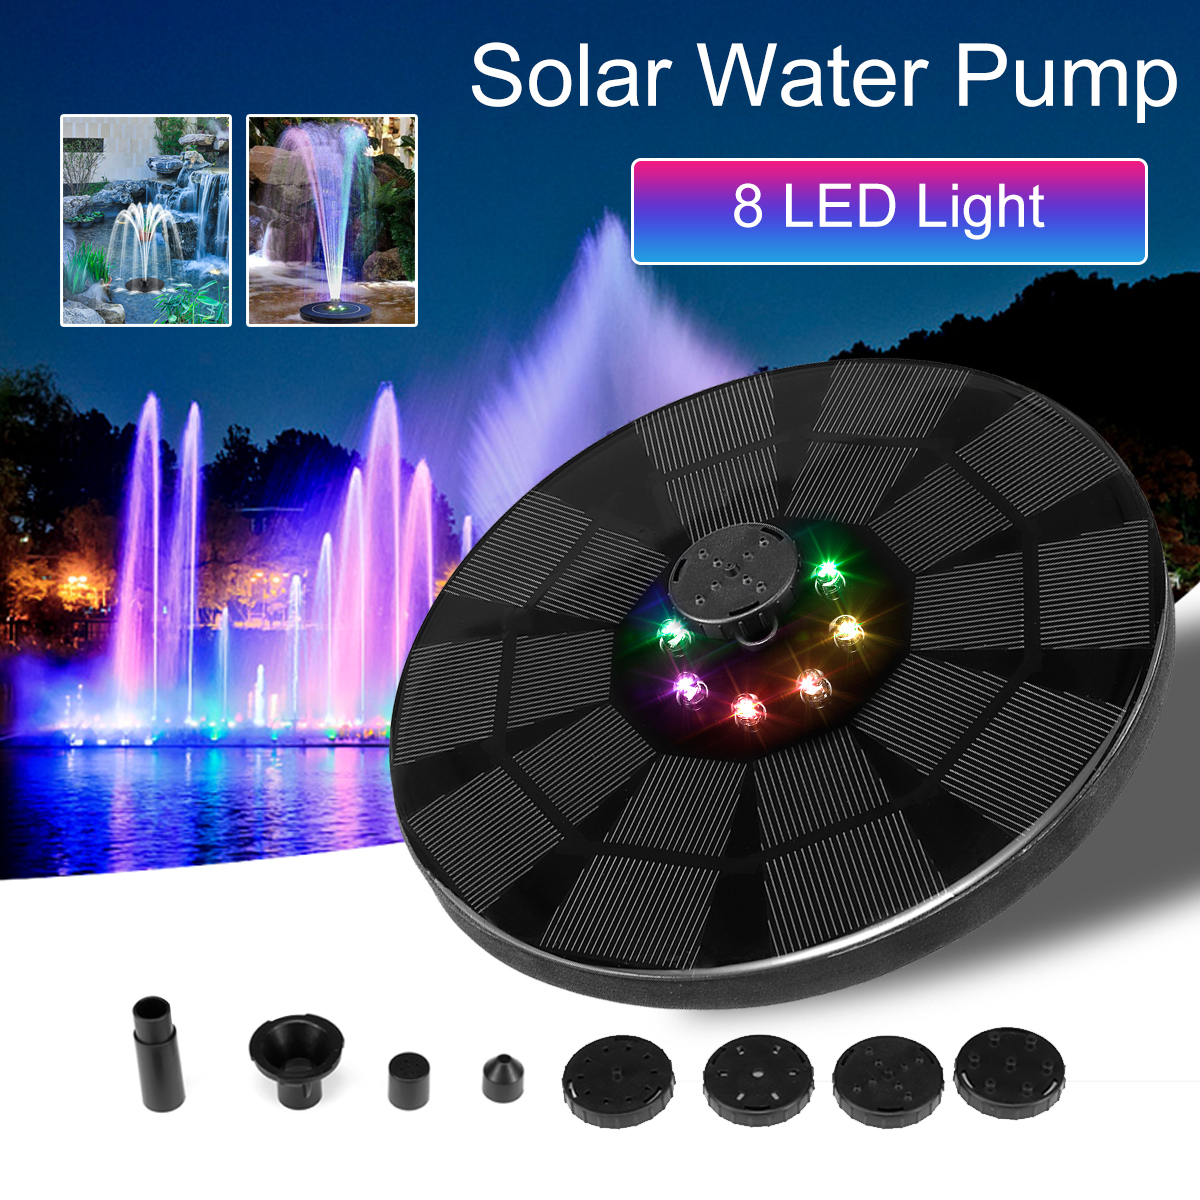 Solar-Powered-Floating-Bird-Bath-Fountain-Outdoor-Pond-Garden-Patio-Water-Pump-W-8-LED-Light-1844028-1